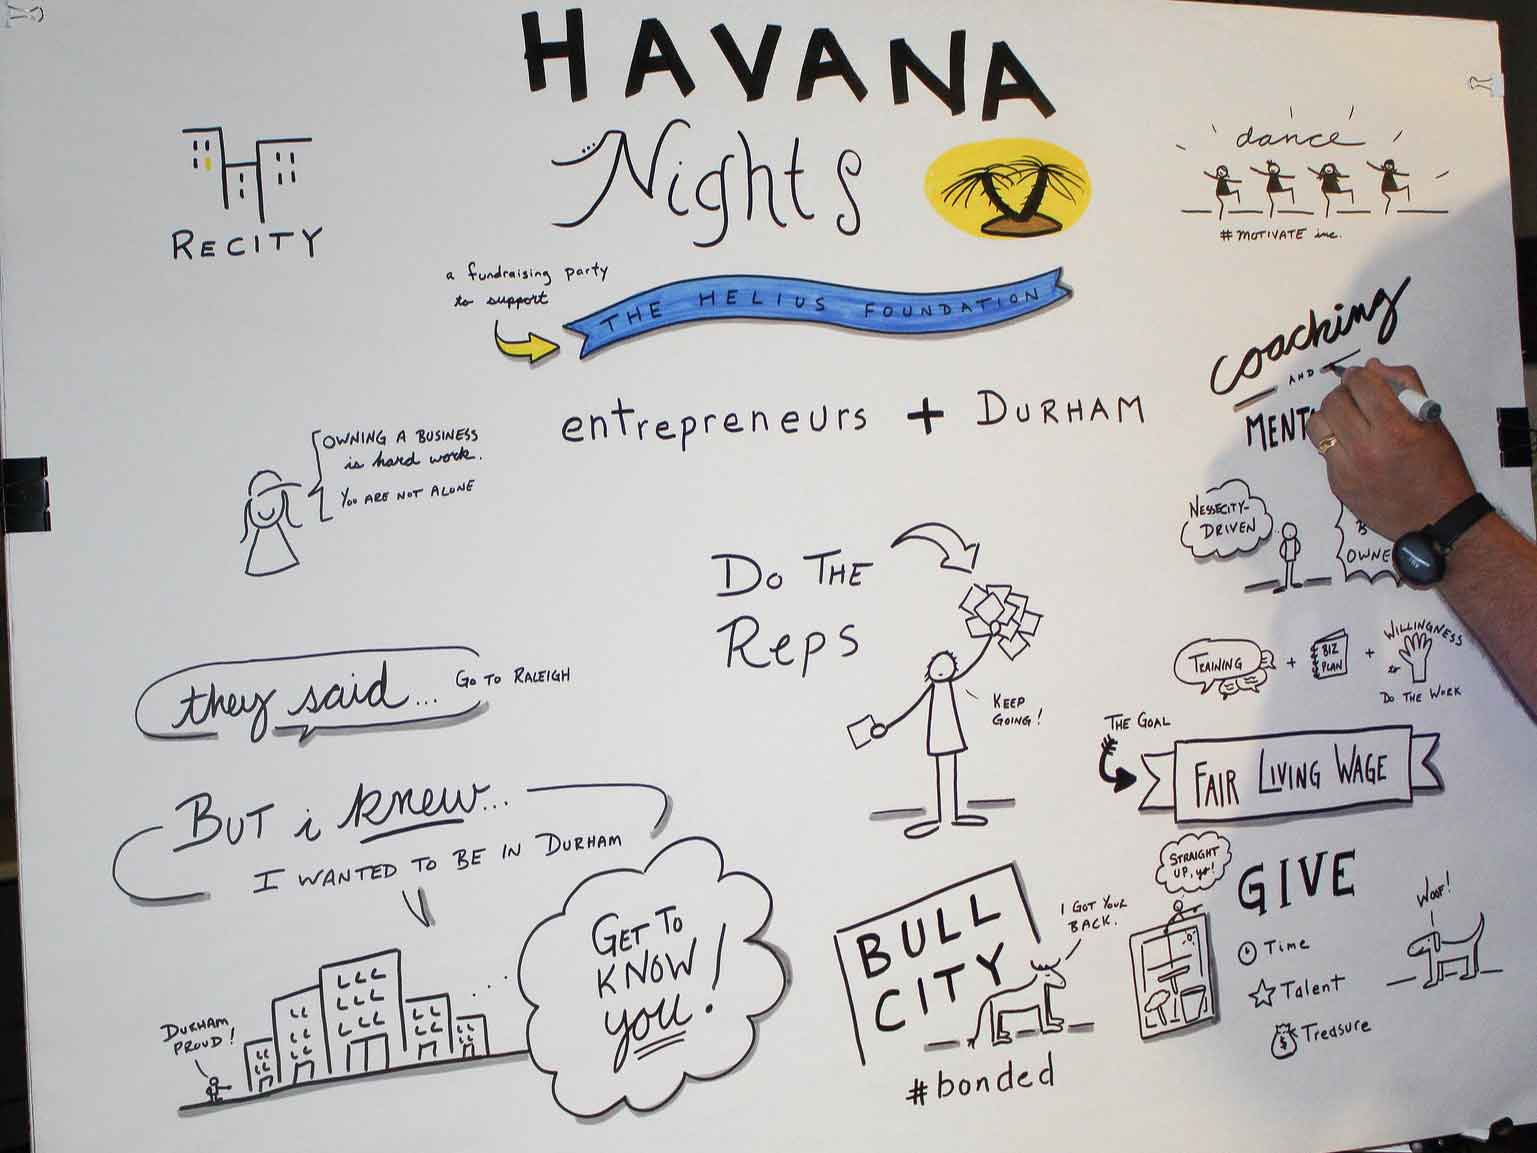 Whiteboard from Havana Nights event